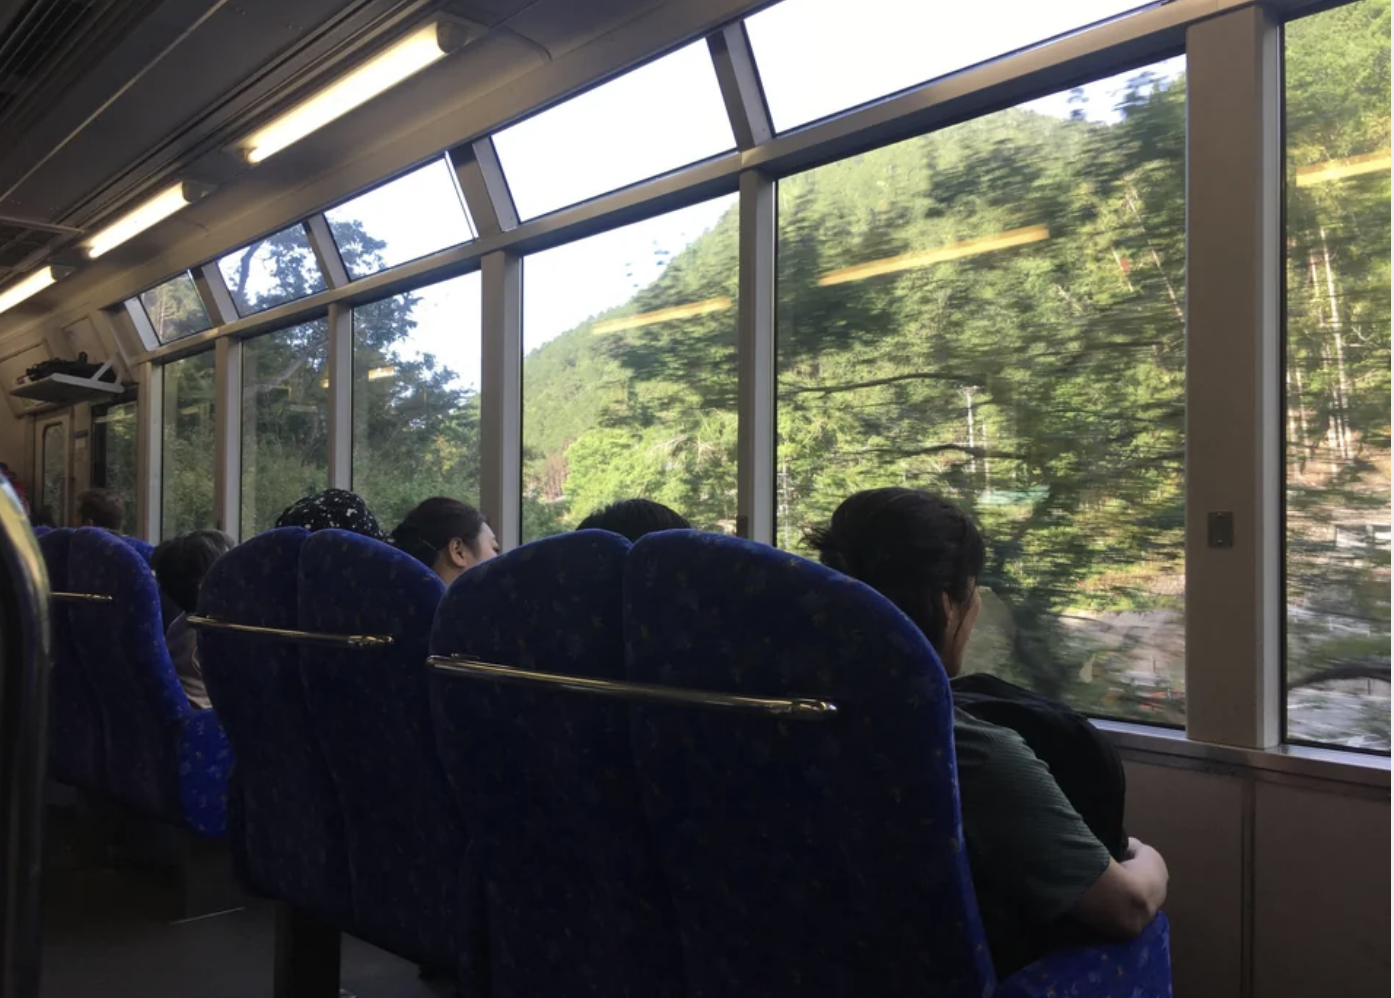 Train seats facing the windows